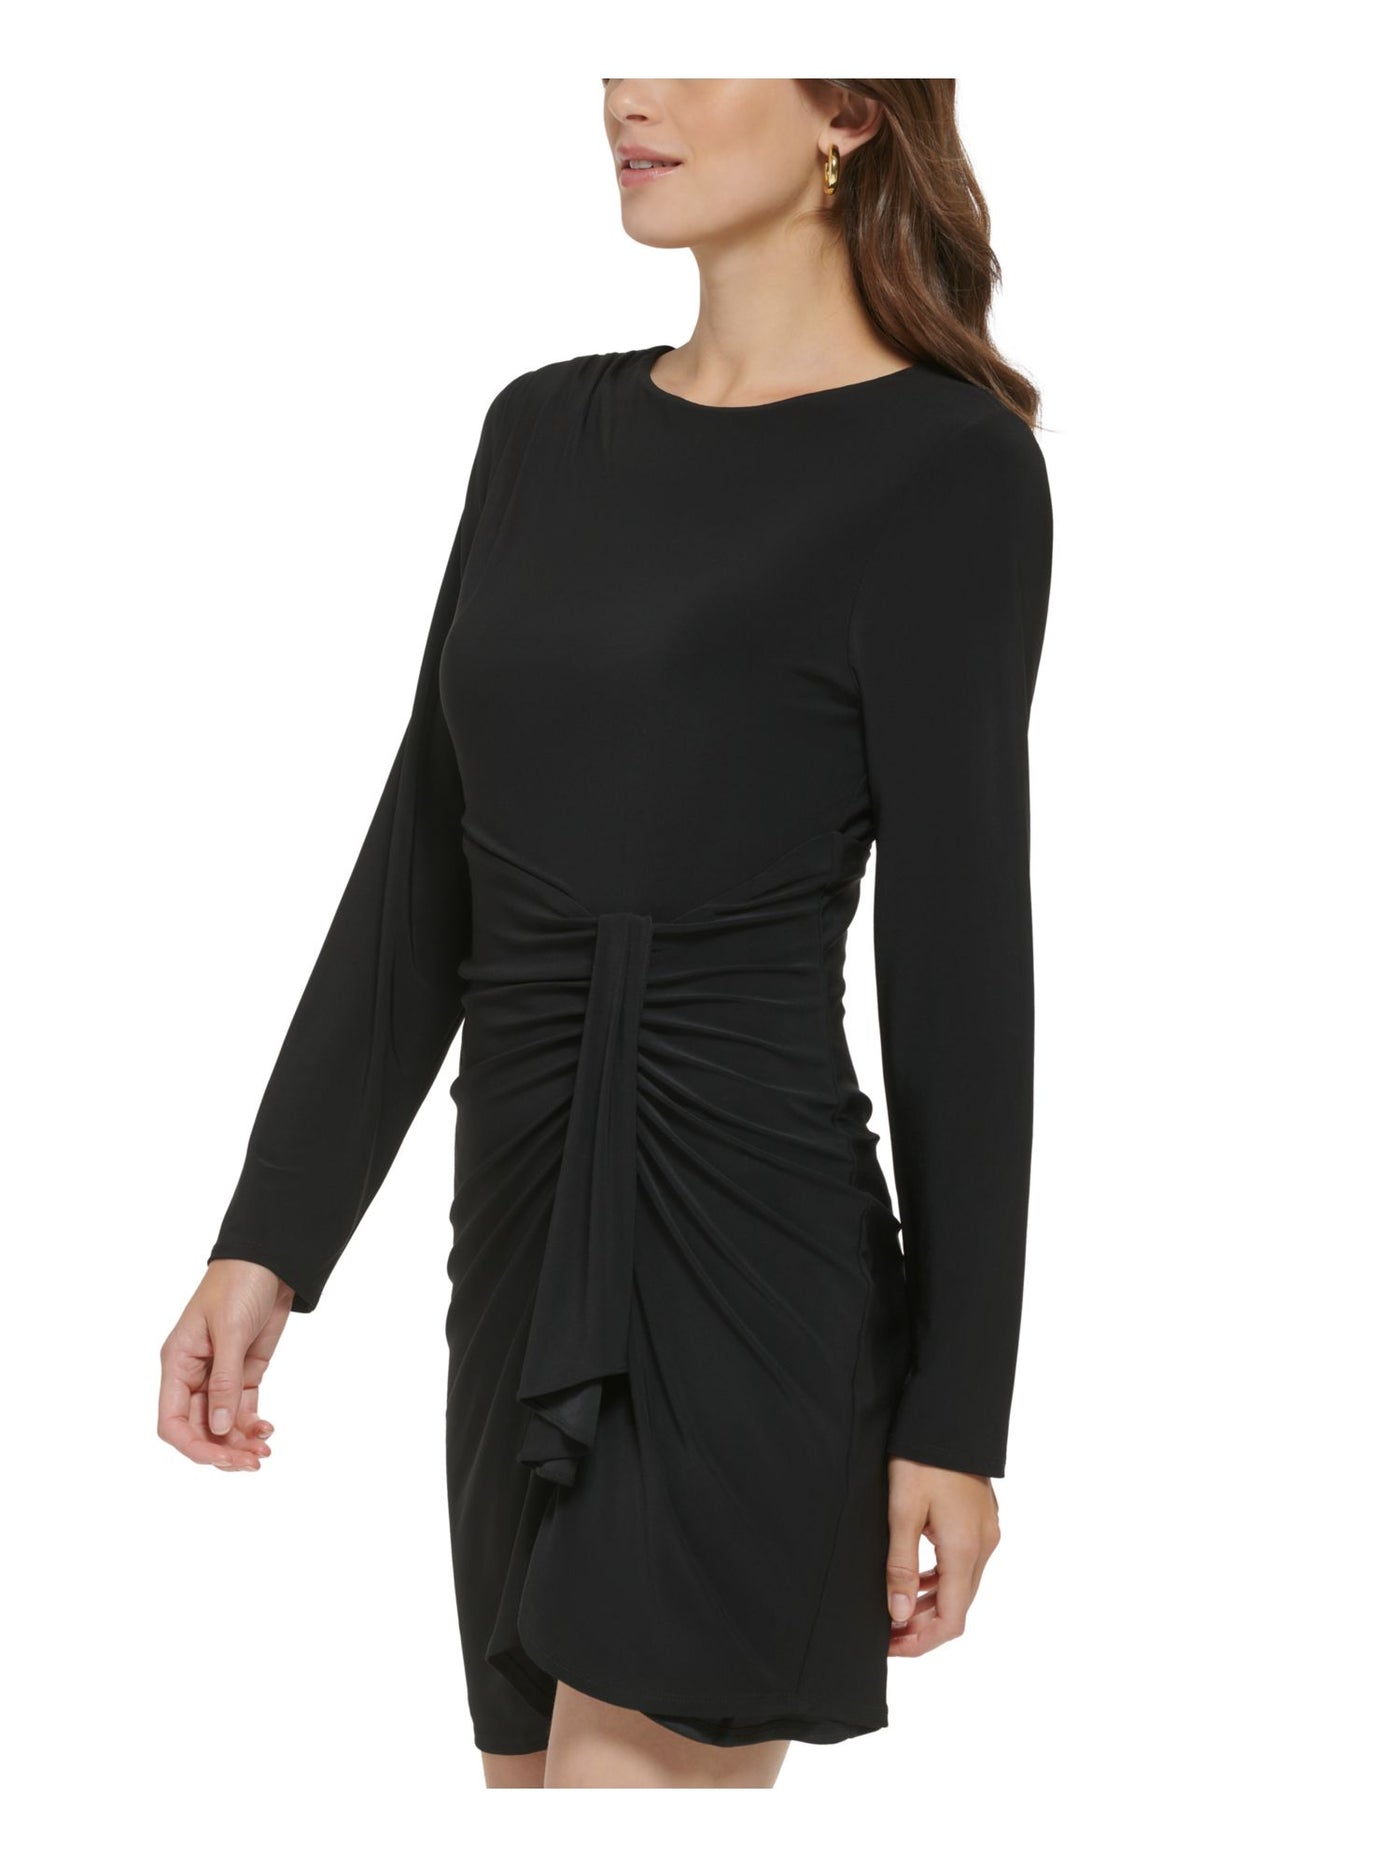 DKNY Womens Black Zippered Ruffled Ruched Lined Long Sleeve Round Neck Short Sheath Dress 8